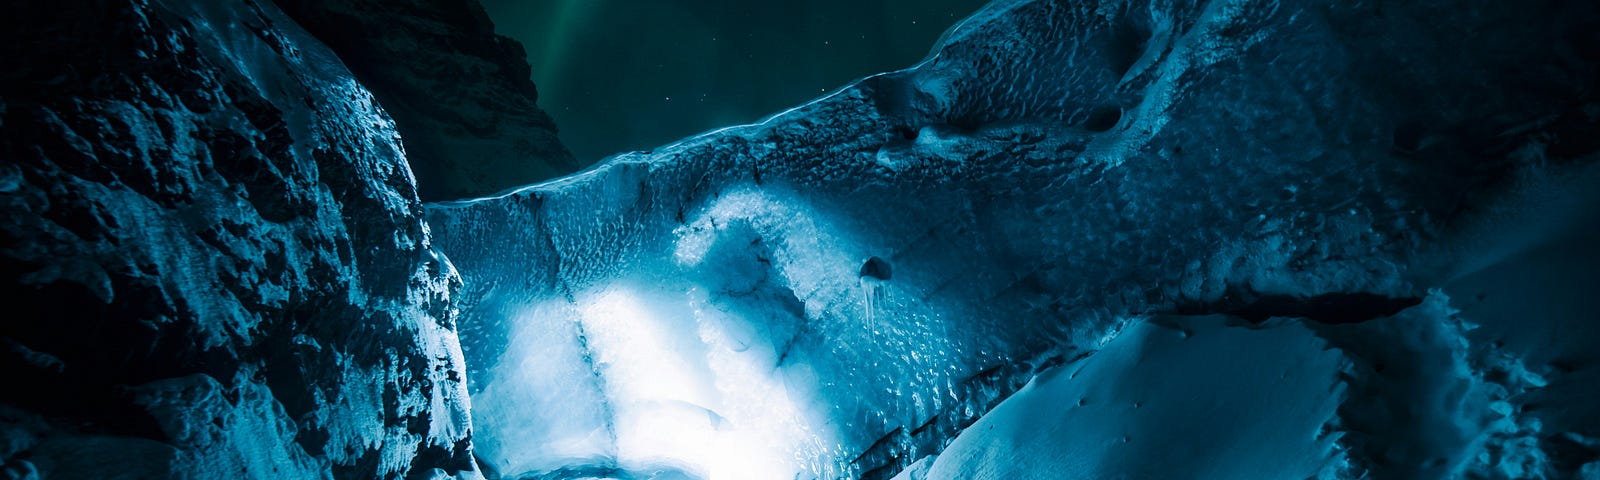 blue ice at night, light up